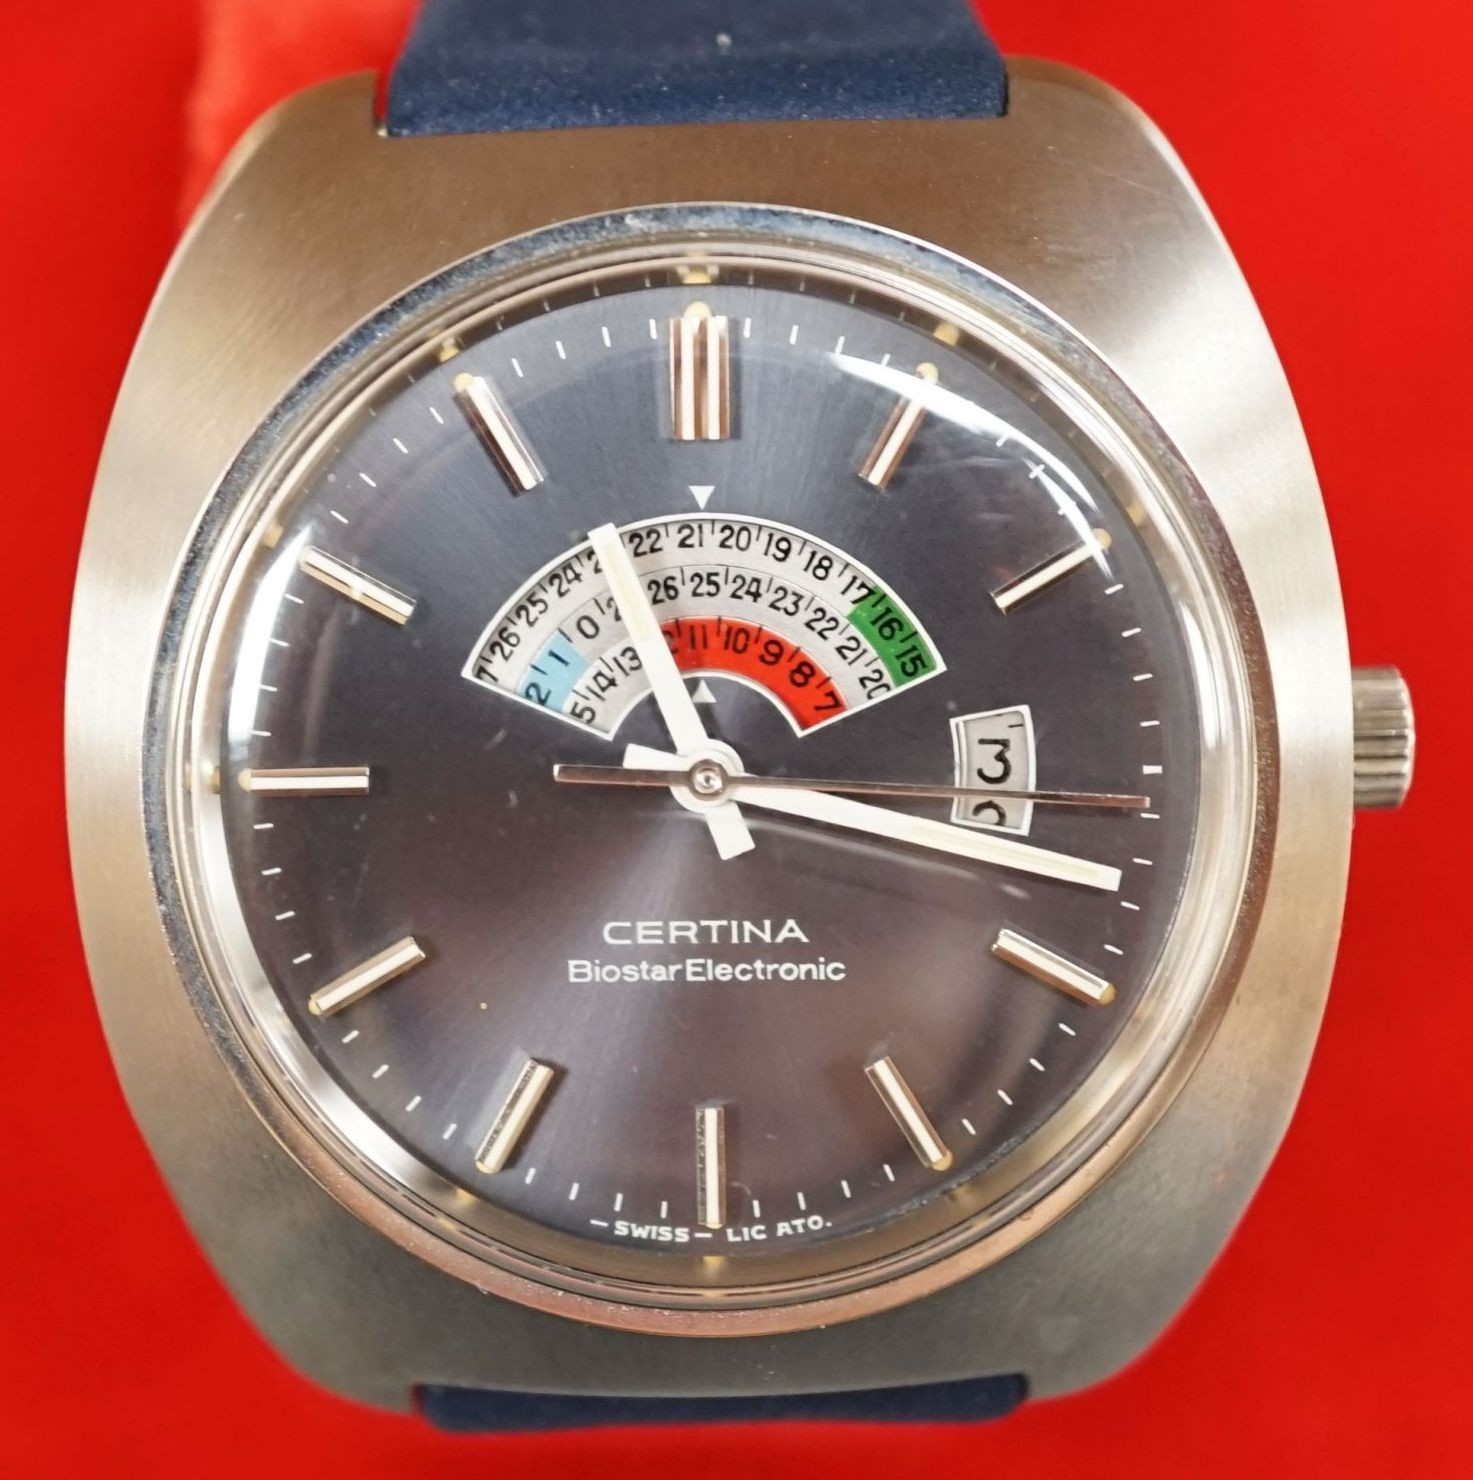 A gentleman's 1970's steel Certina Biostar Electronic wrist watch, on Certina strap, case diameter 40mm, with Certina box.